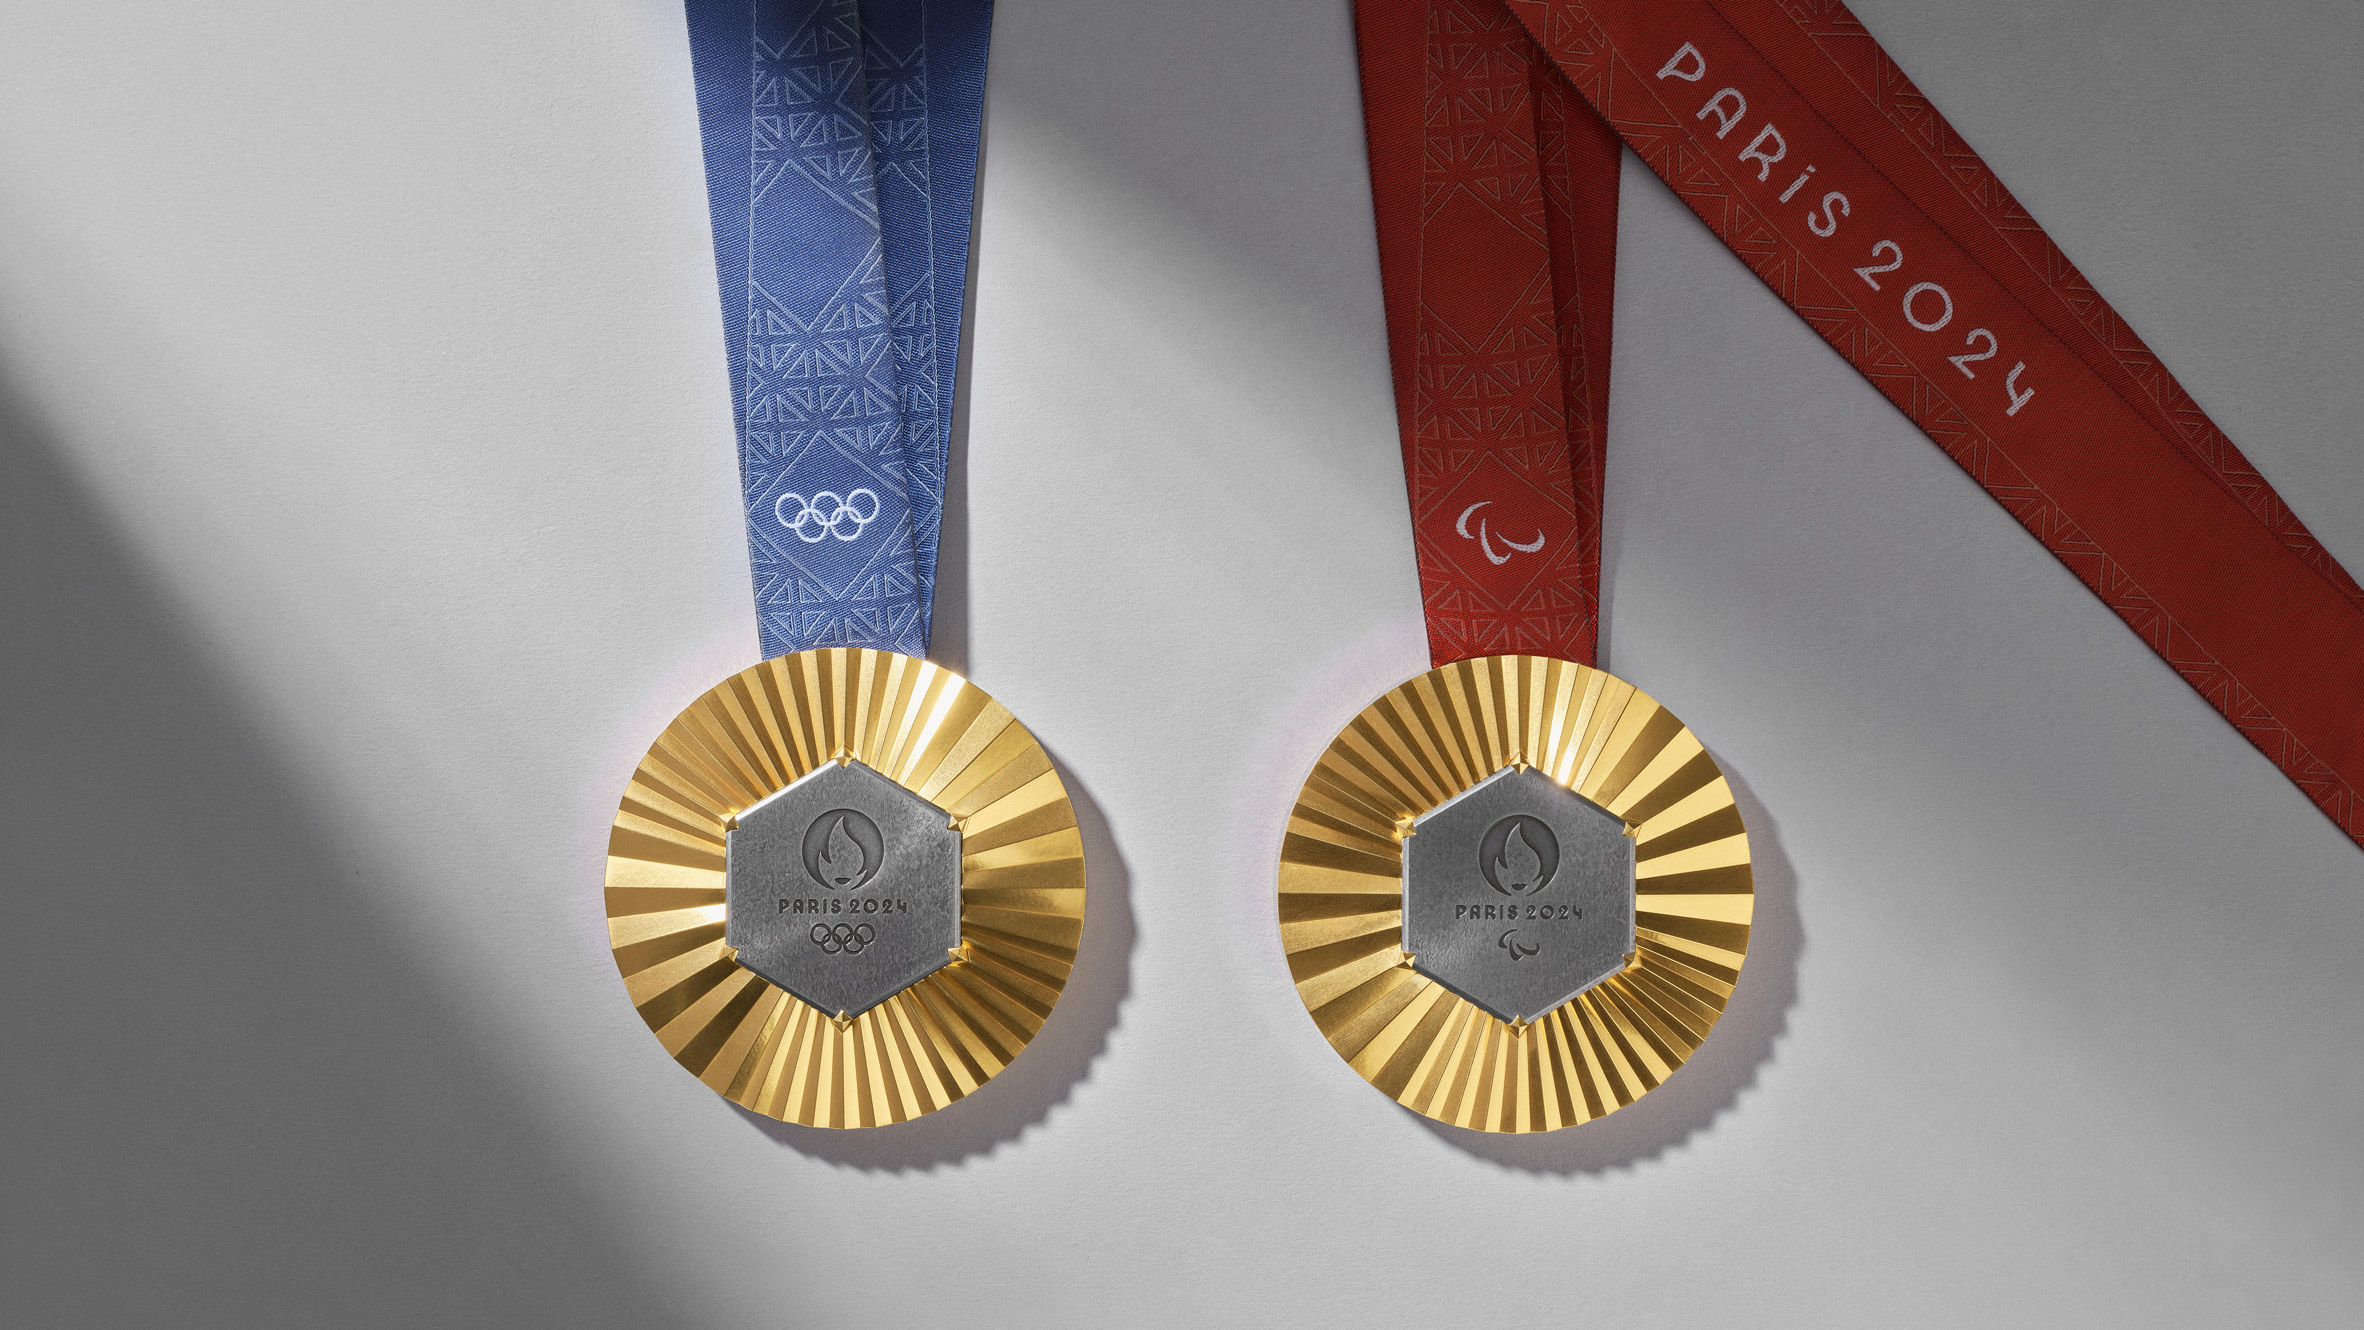 Fragments of Eiffel Tower adorn Paris 2024 Olympic medals Democratic